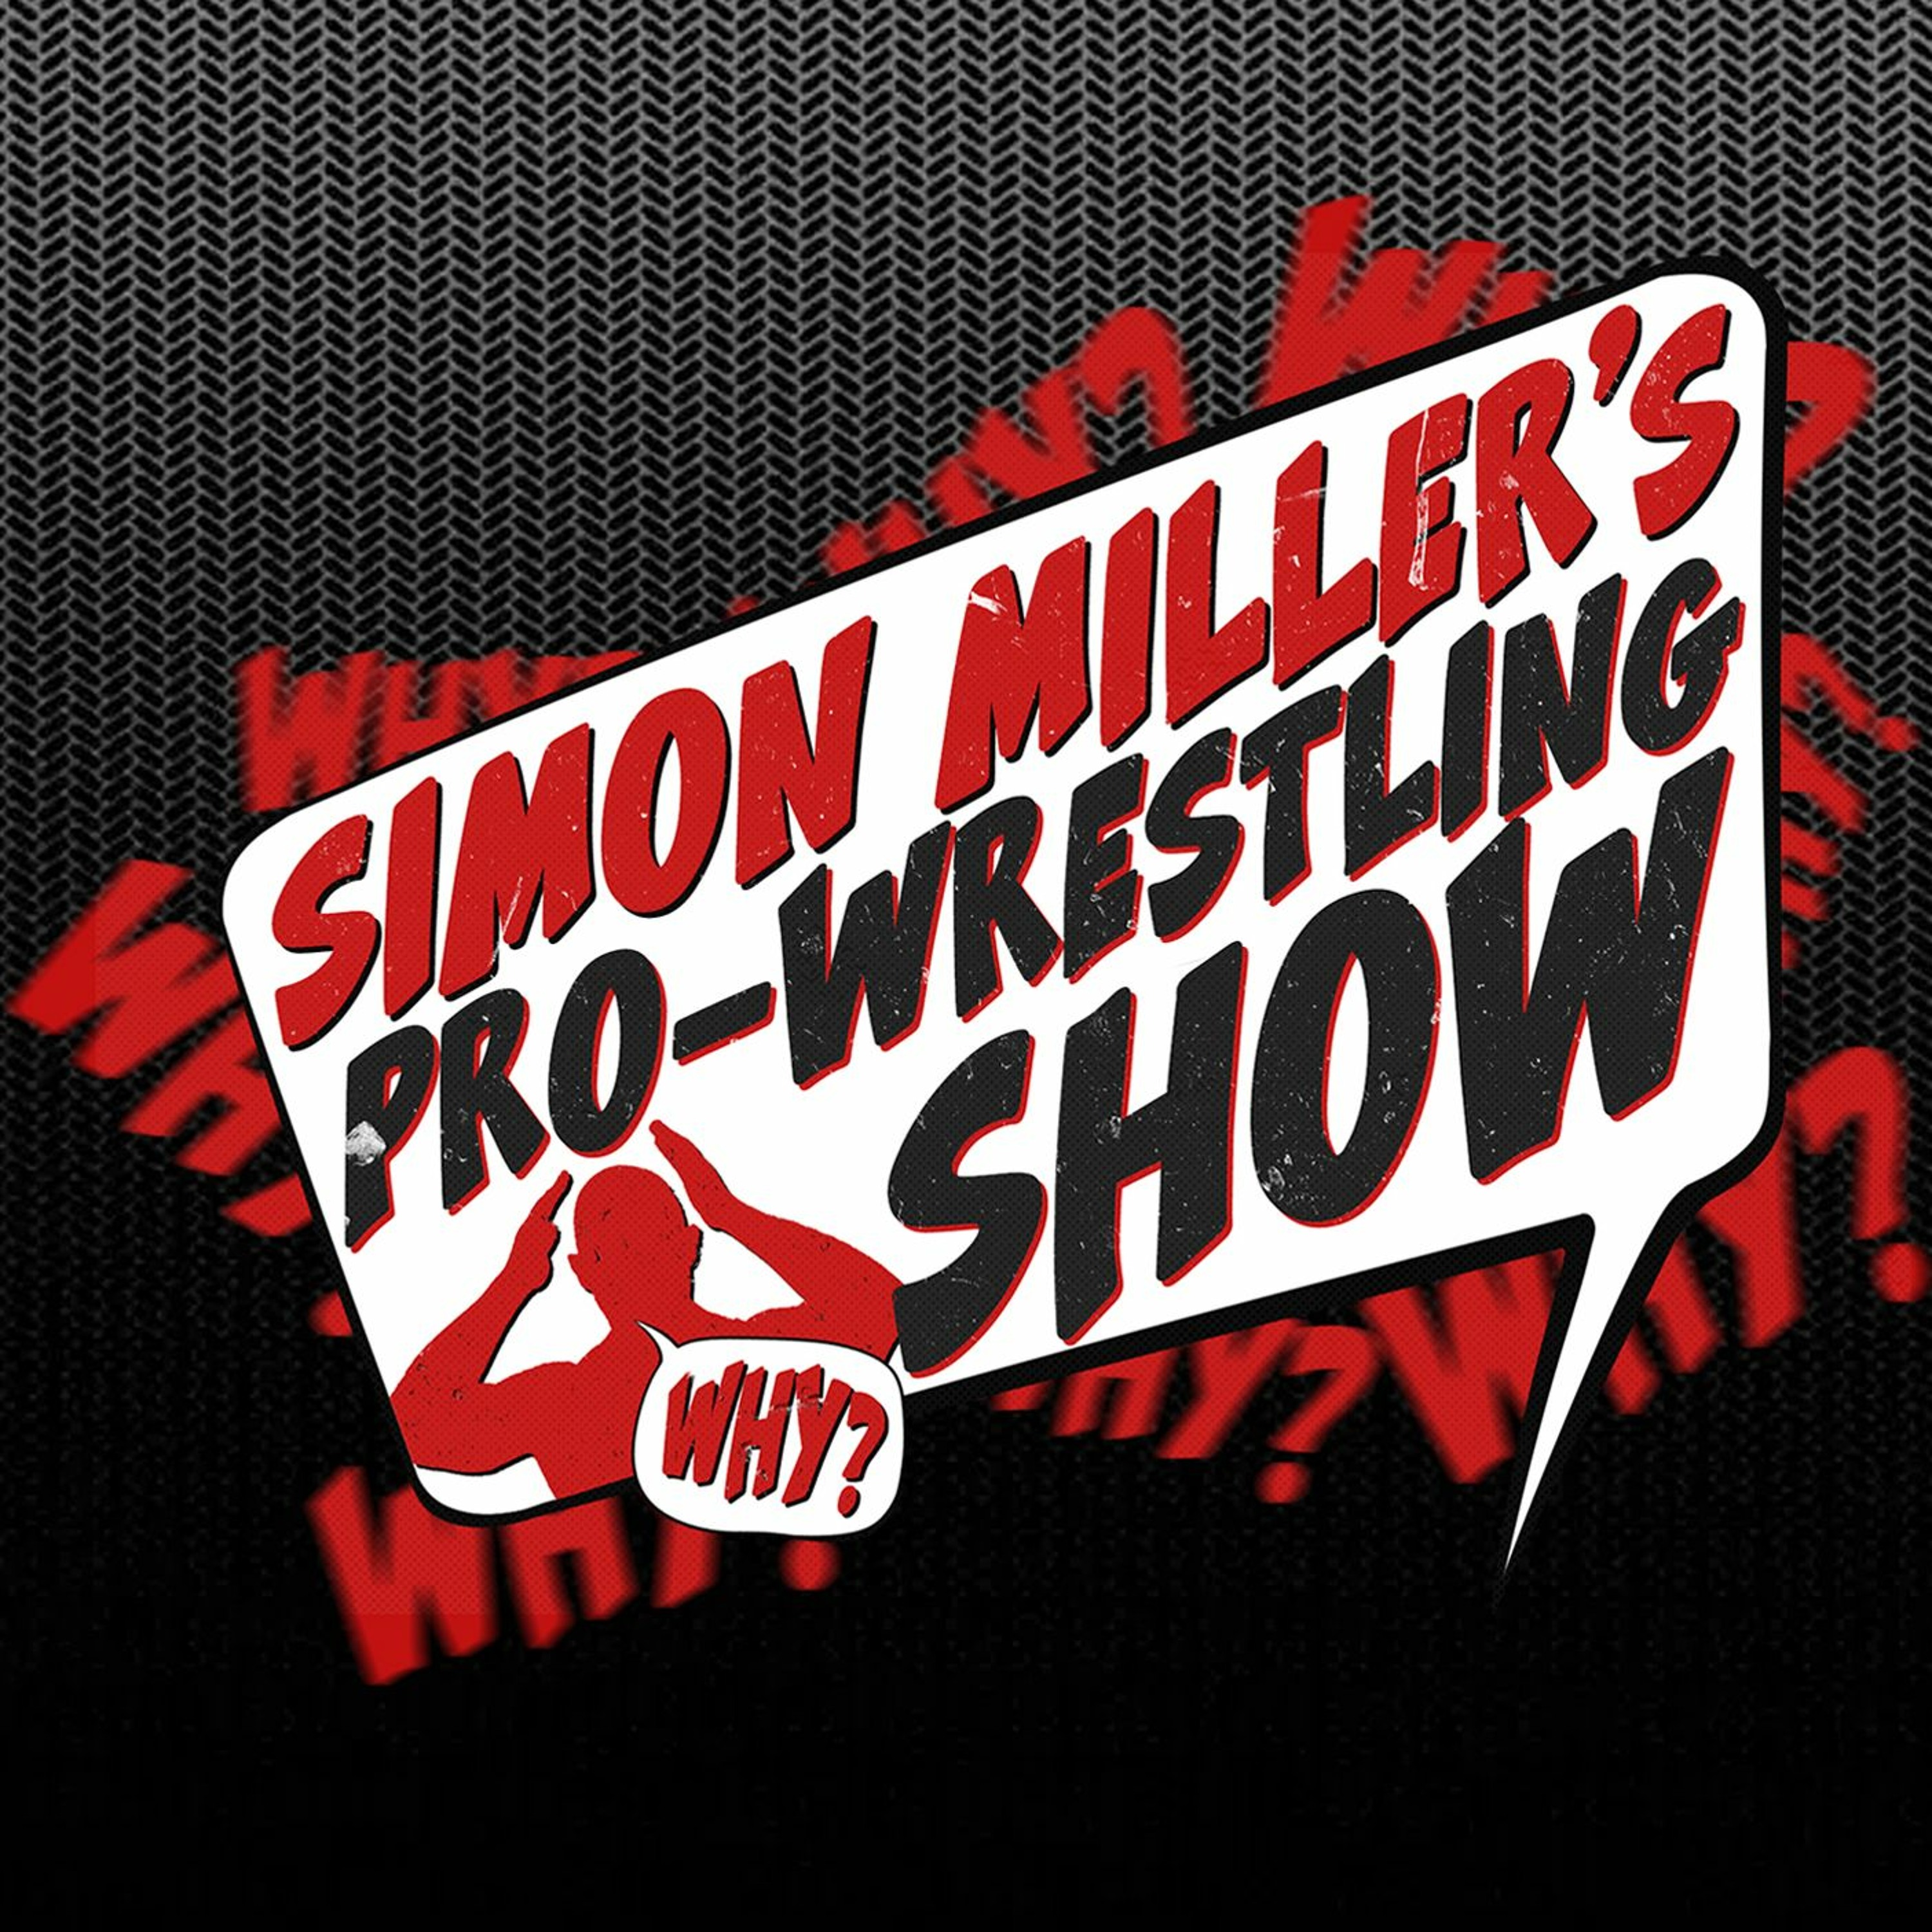 Eps 400 - CM Punk Backstage At WWE! A Brand New WWE Title! WWE CRAZINESS!